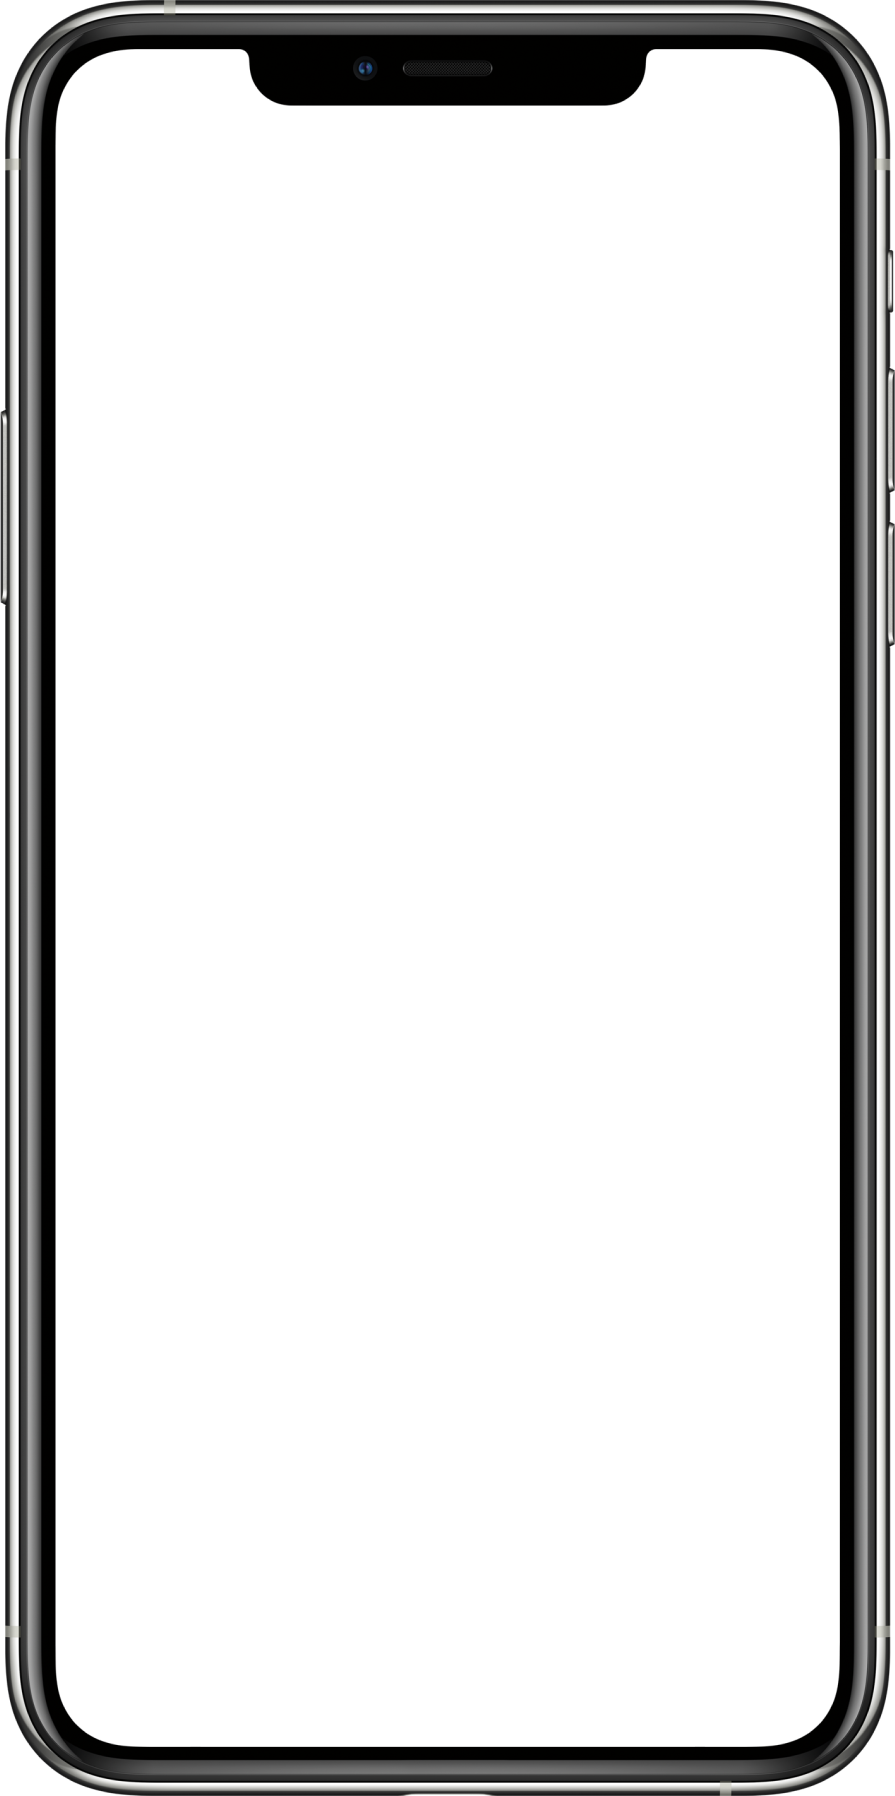 iphone overlay